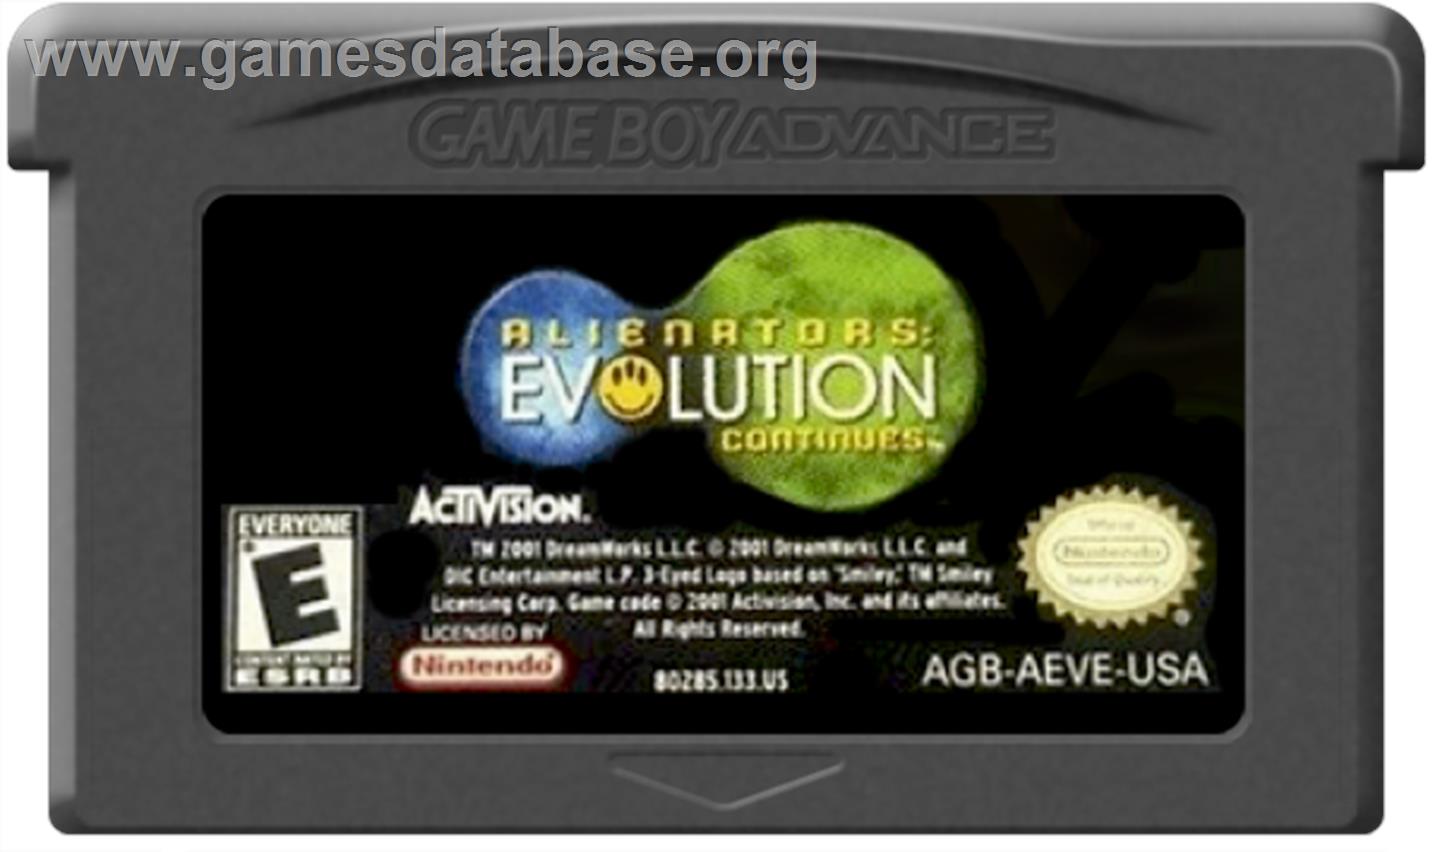 Alienators: Evolution Continues - Nintendo Game Boy Advance - Artwork - Cartridge